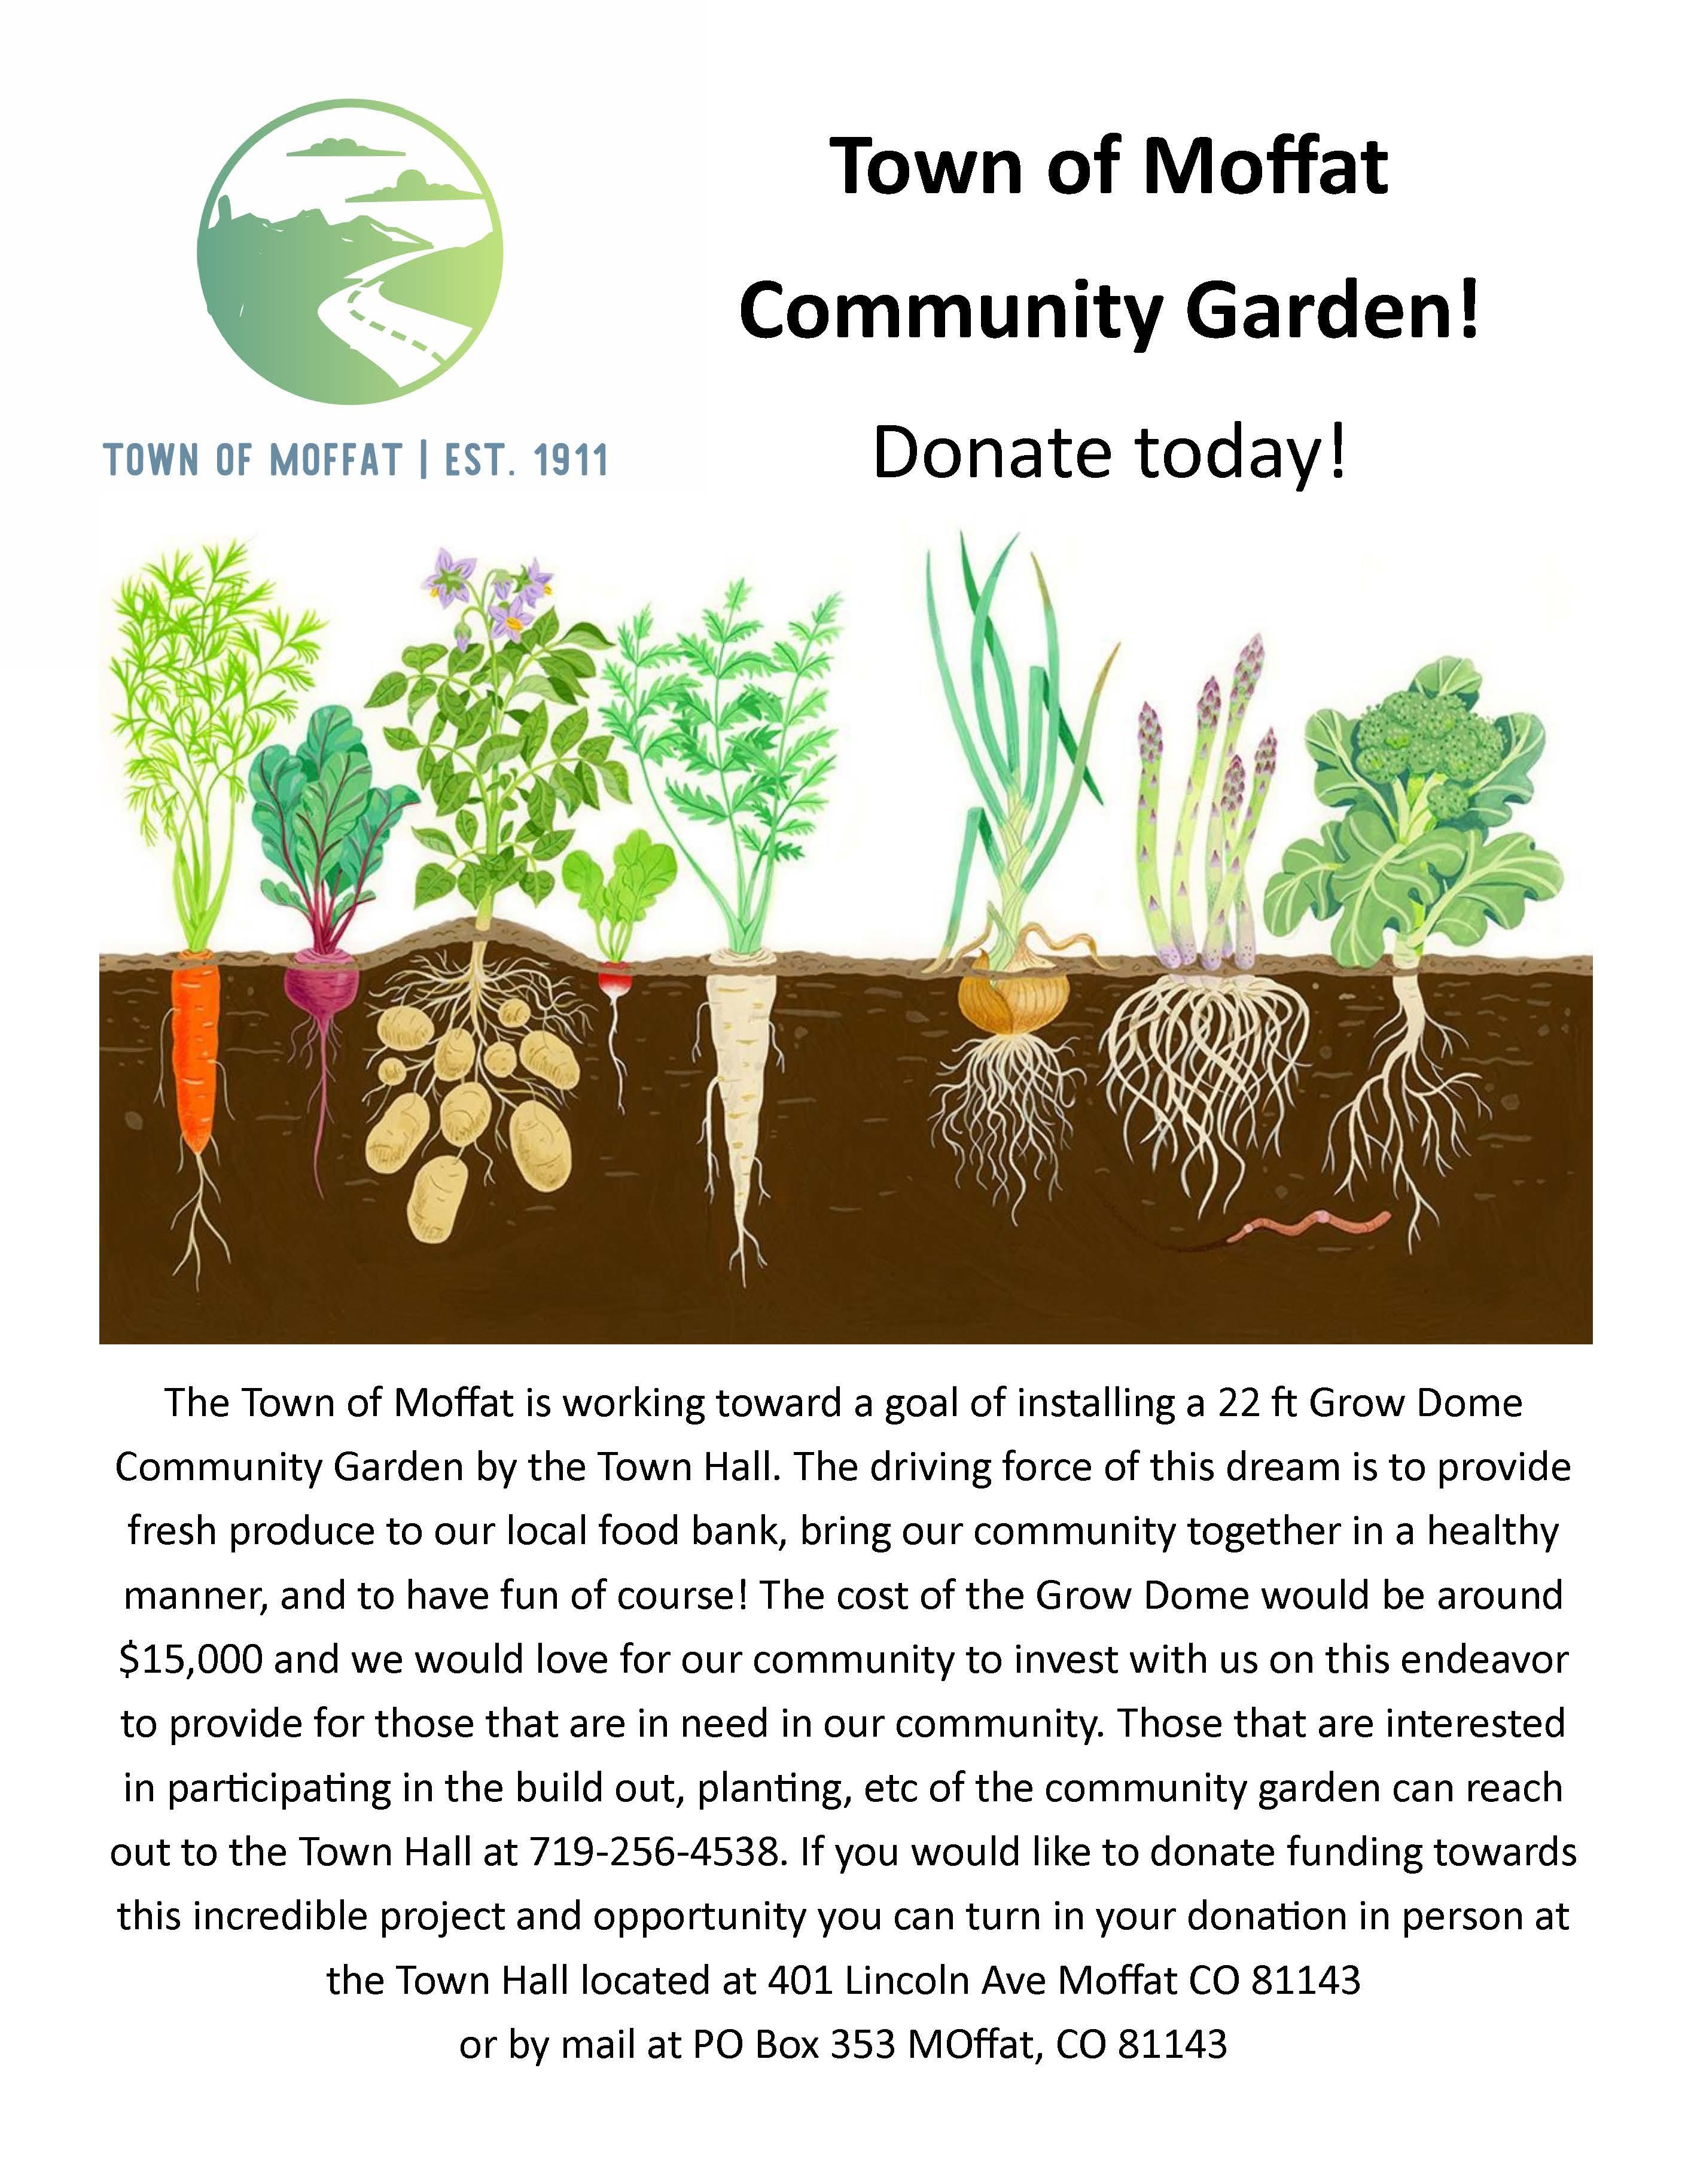 Community Garden Fundraiser poster 